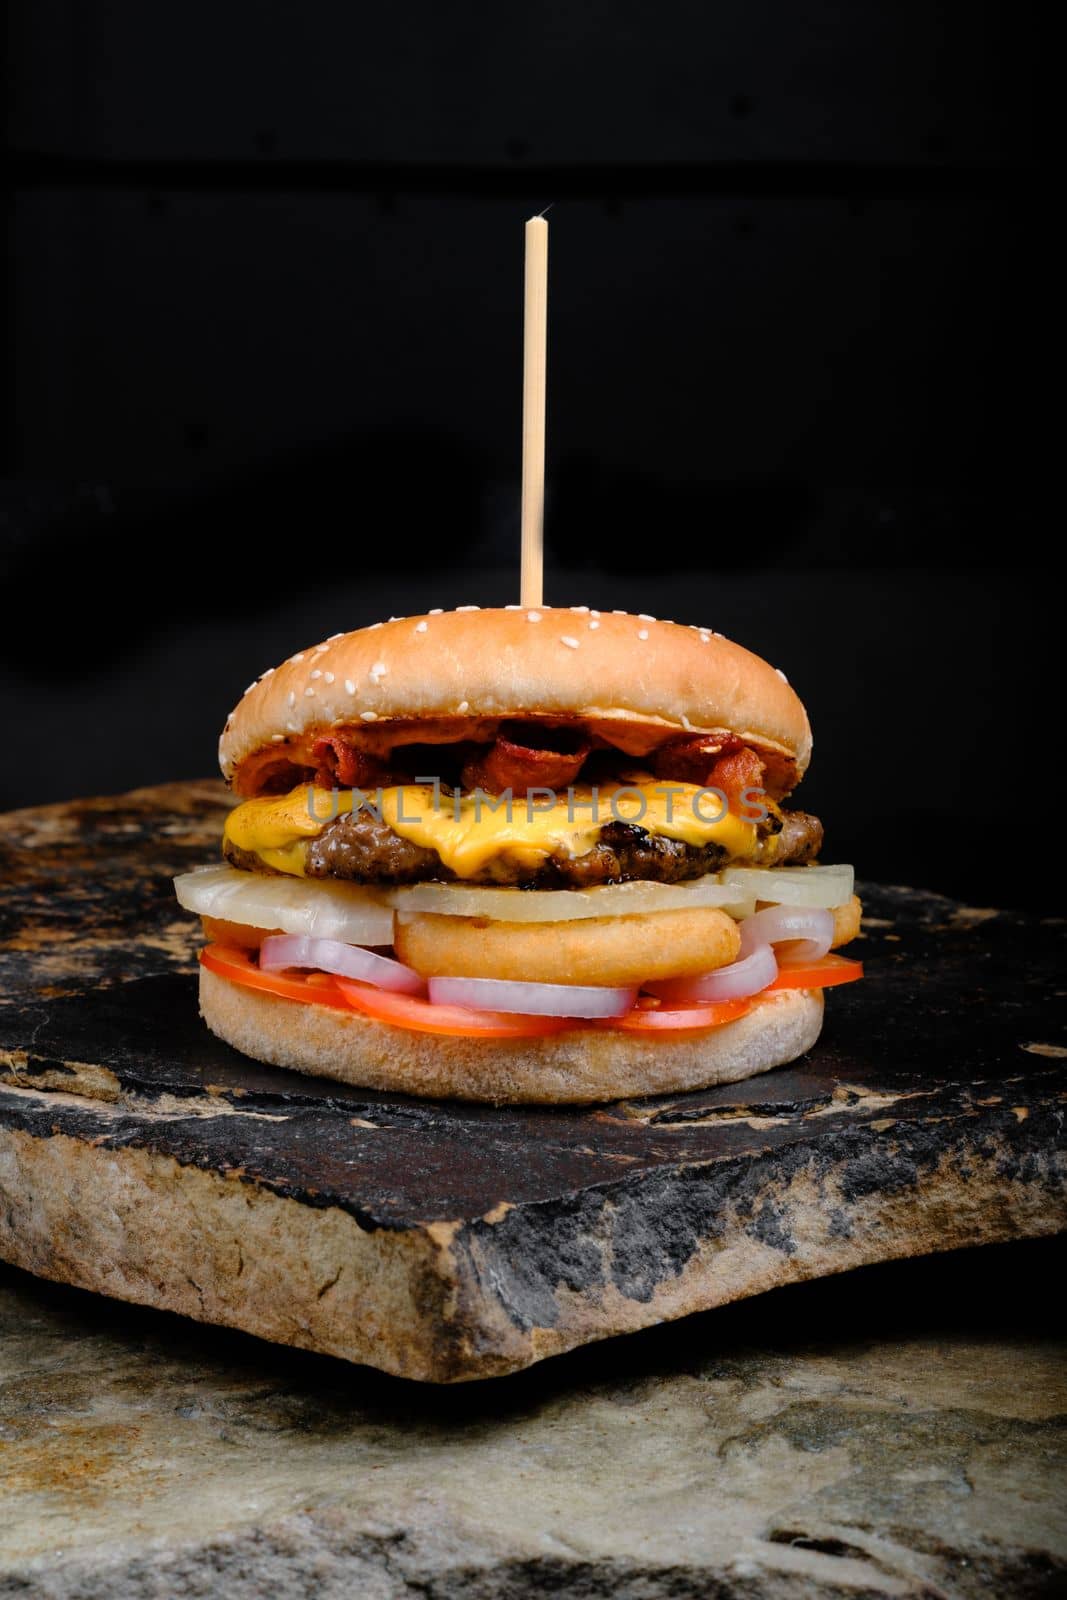 Rustic tasty Burger on Stone Background dark